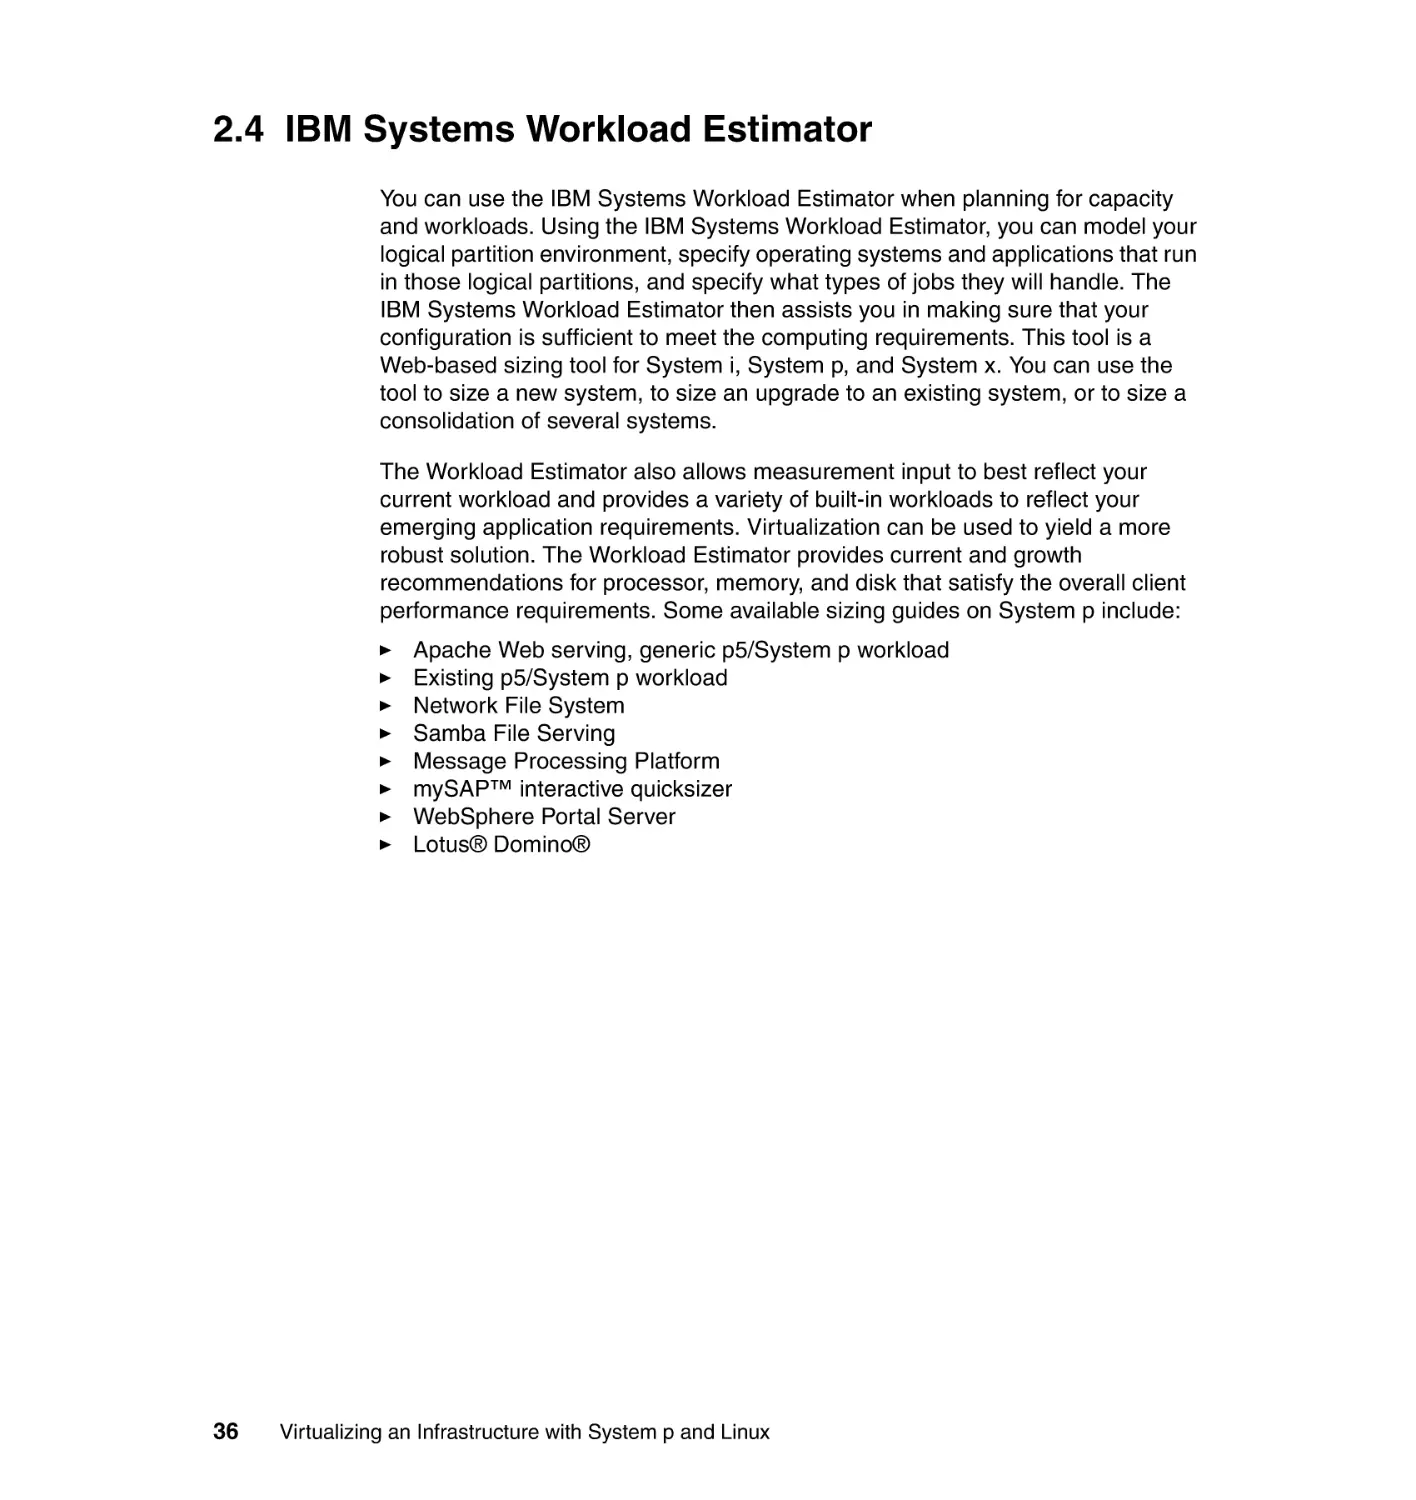 2.4 IBM Systems Workload Estimator